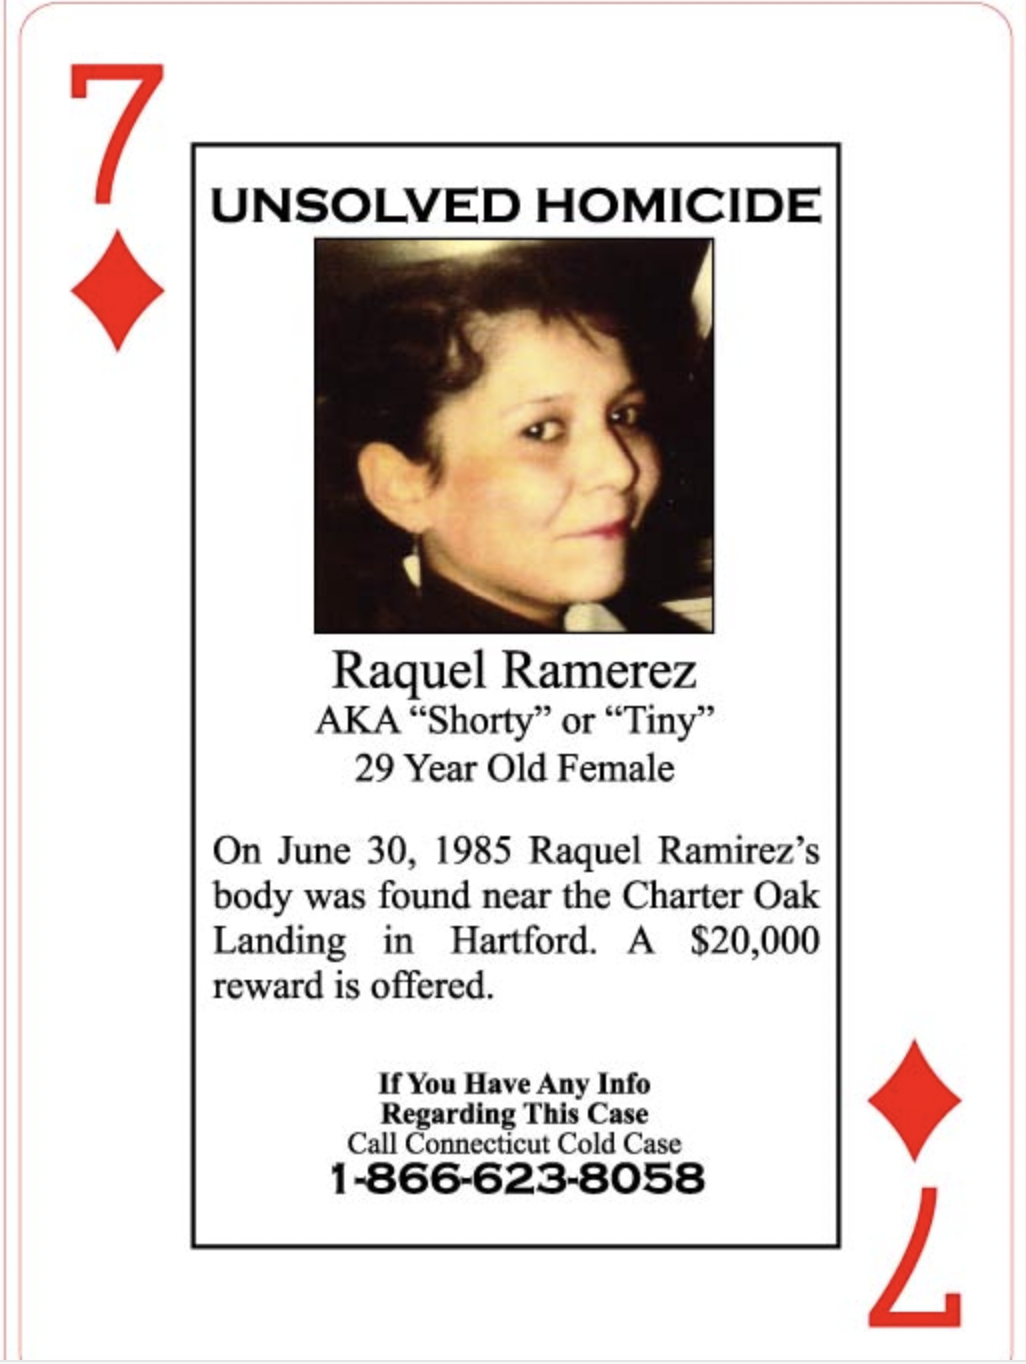 Raquel Ramirez cold case card